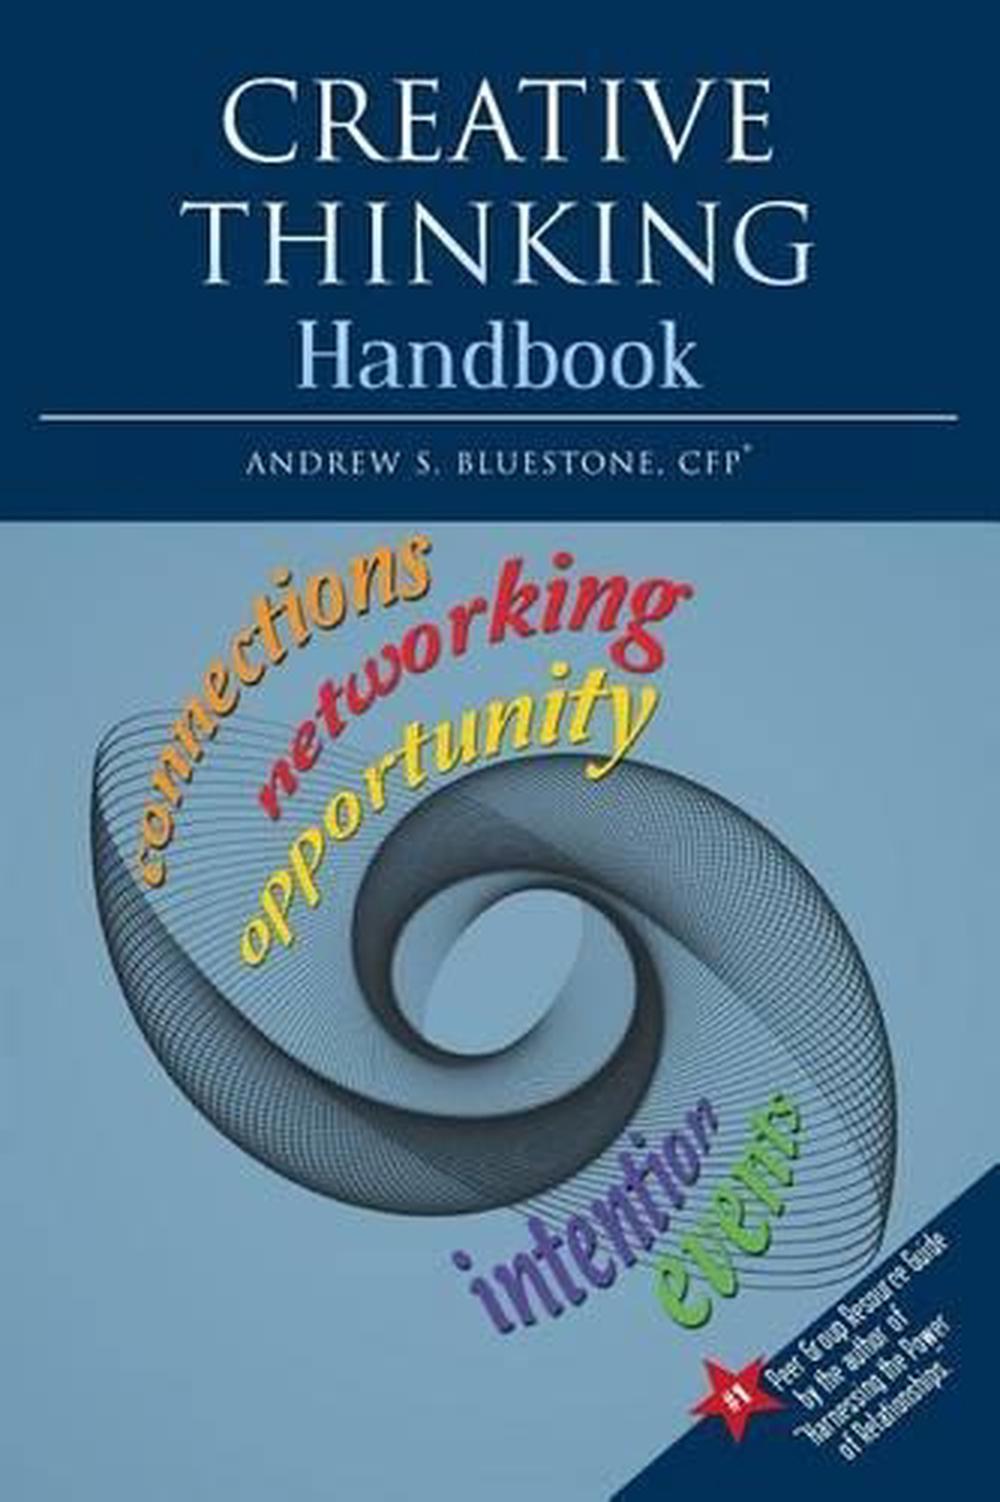 Creative Thinking Book Pdf – Handbook solving griffiths parkeerplaats aanbevolen creatiefdenken lengte afmetingen ceotodaymagazine